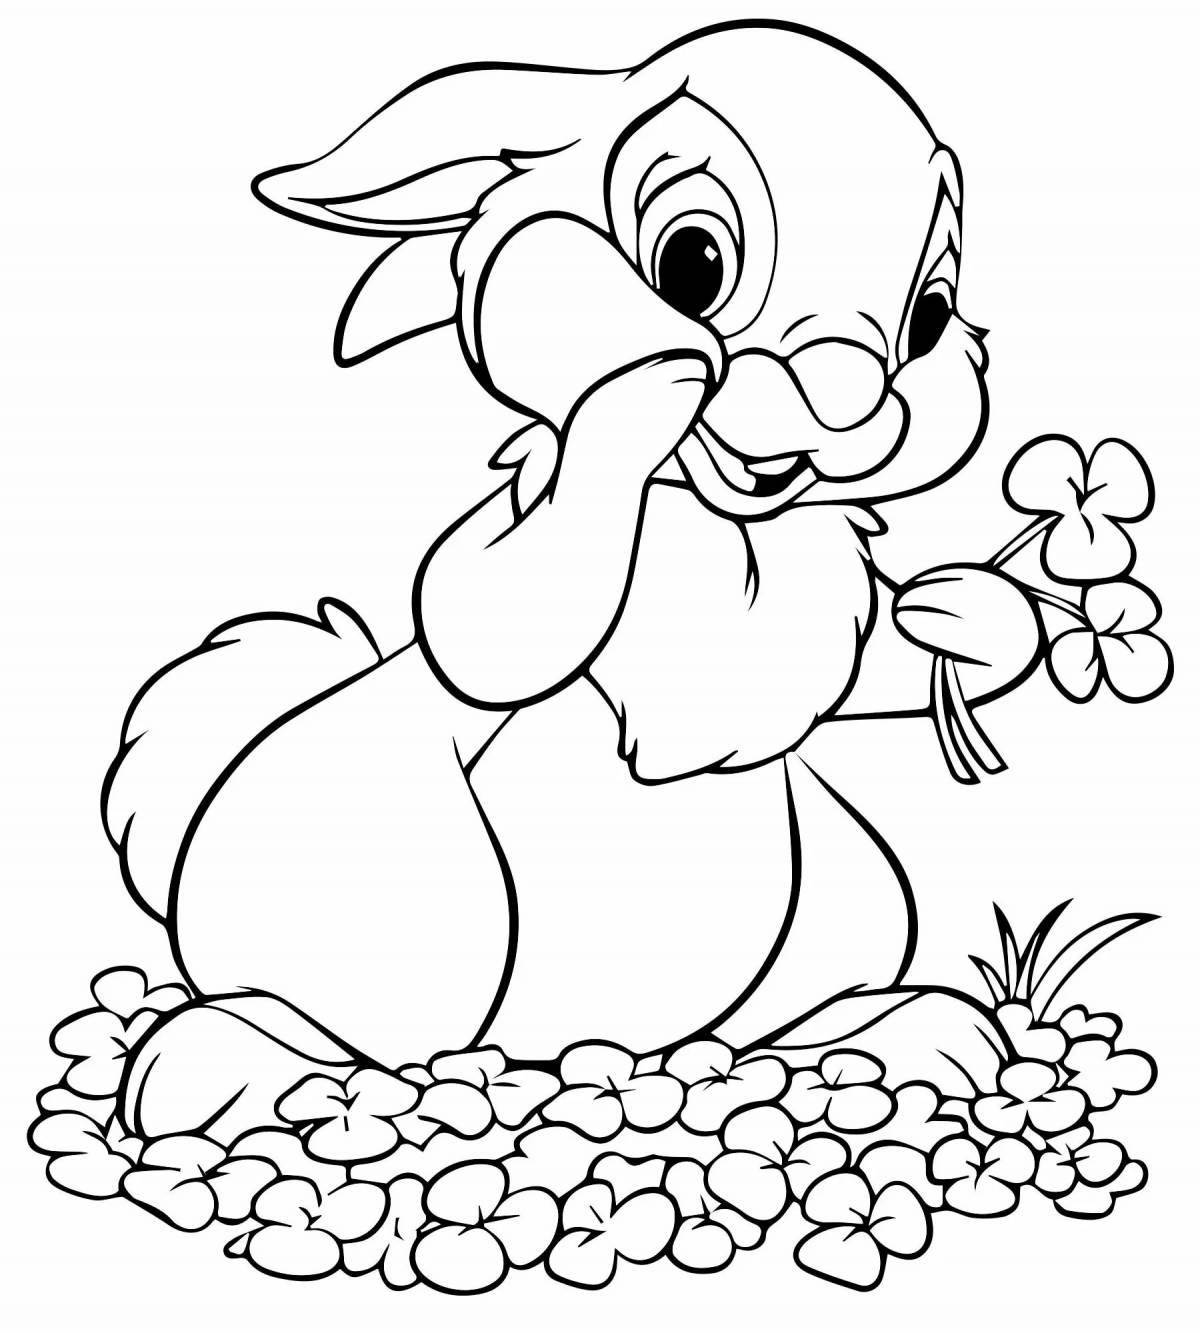 Color-explosion coloring page рисунок зайца для детей